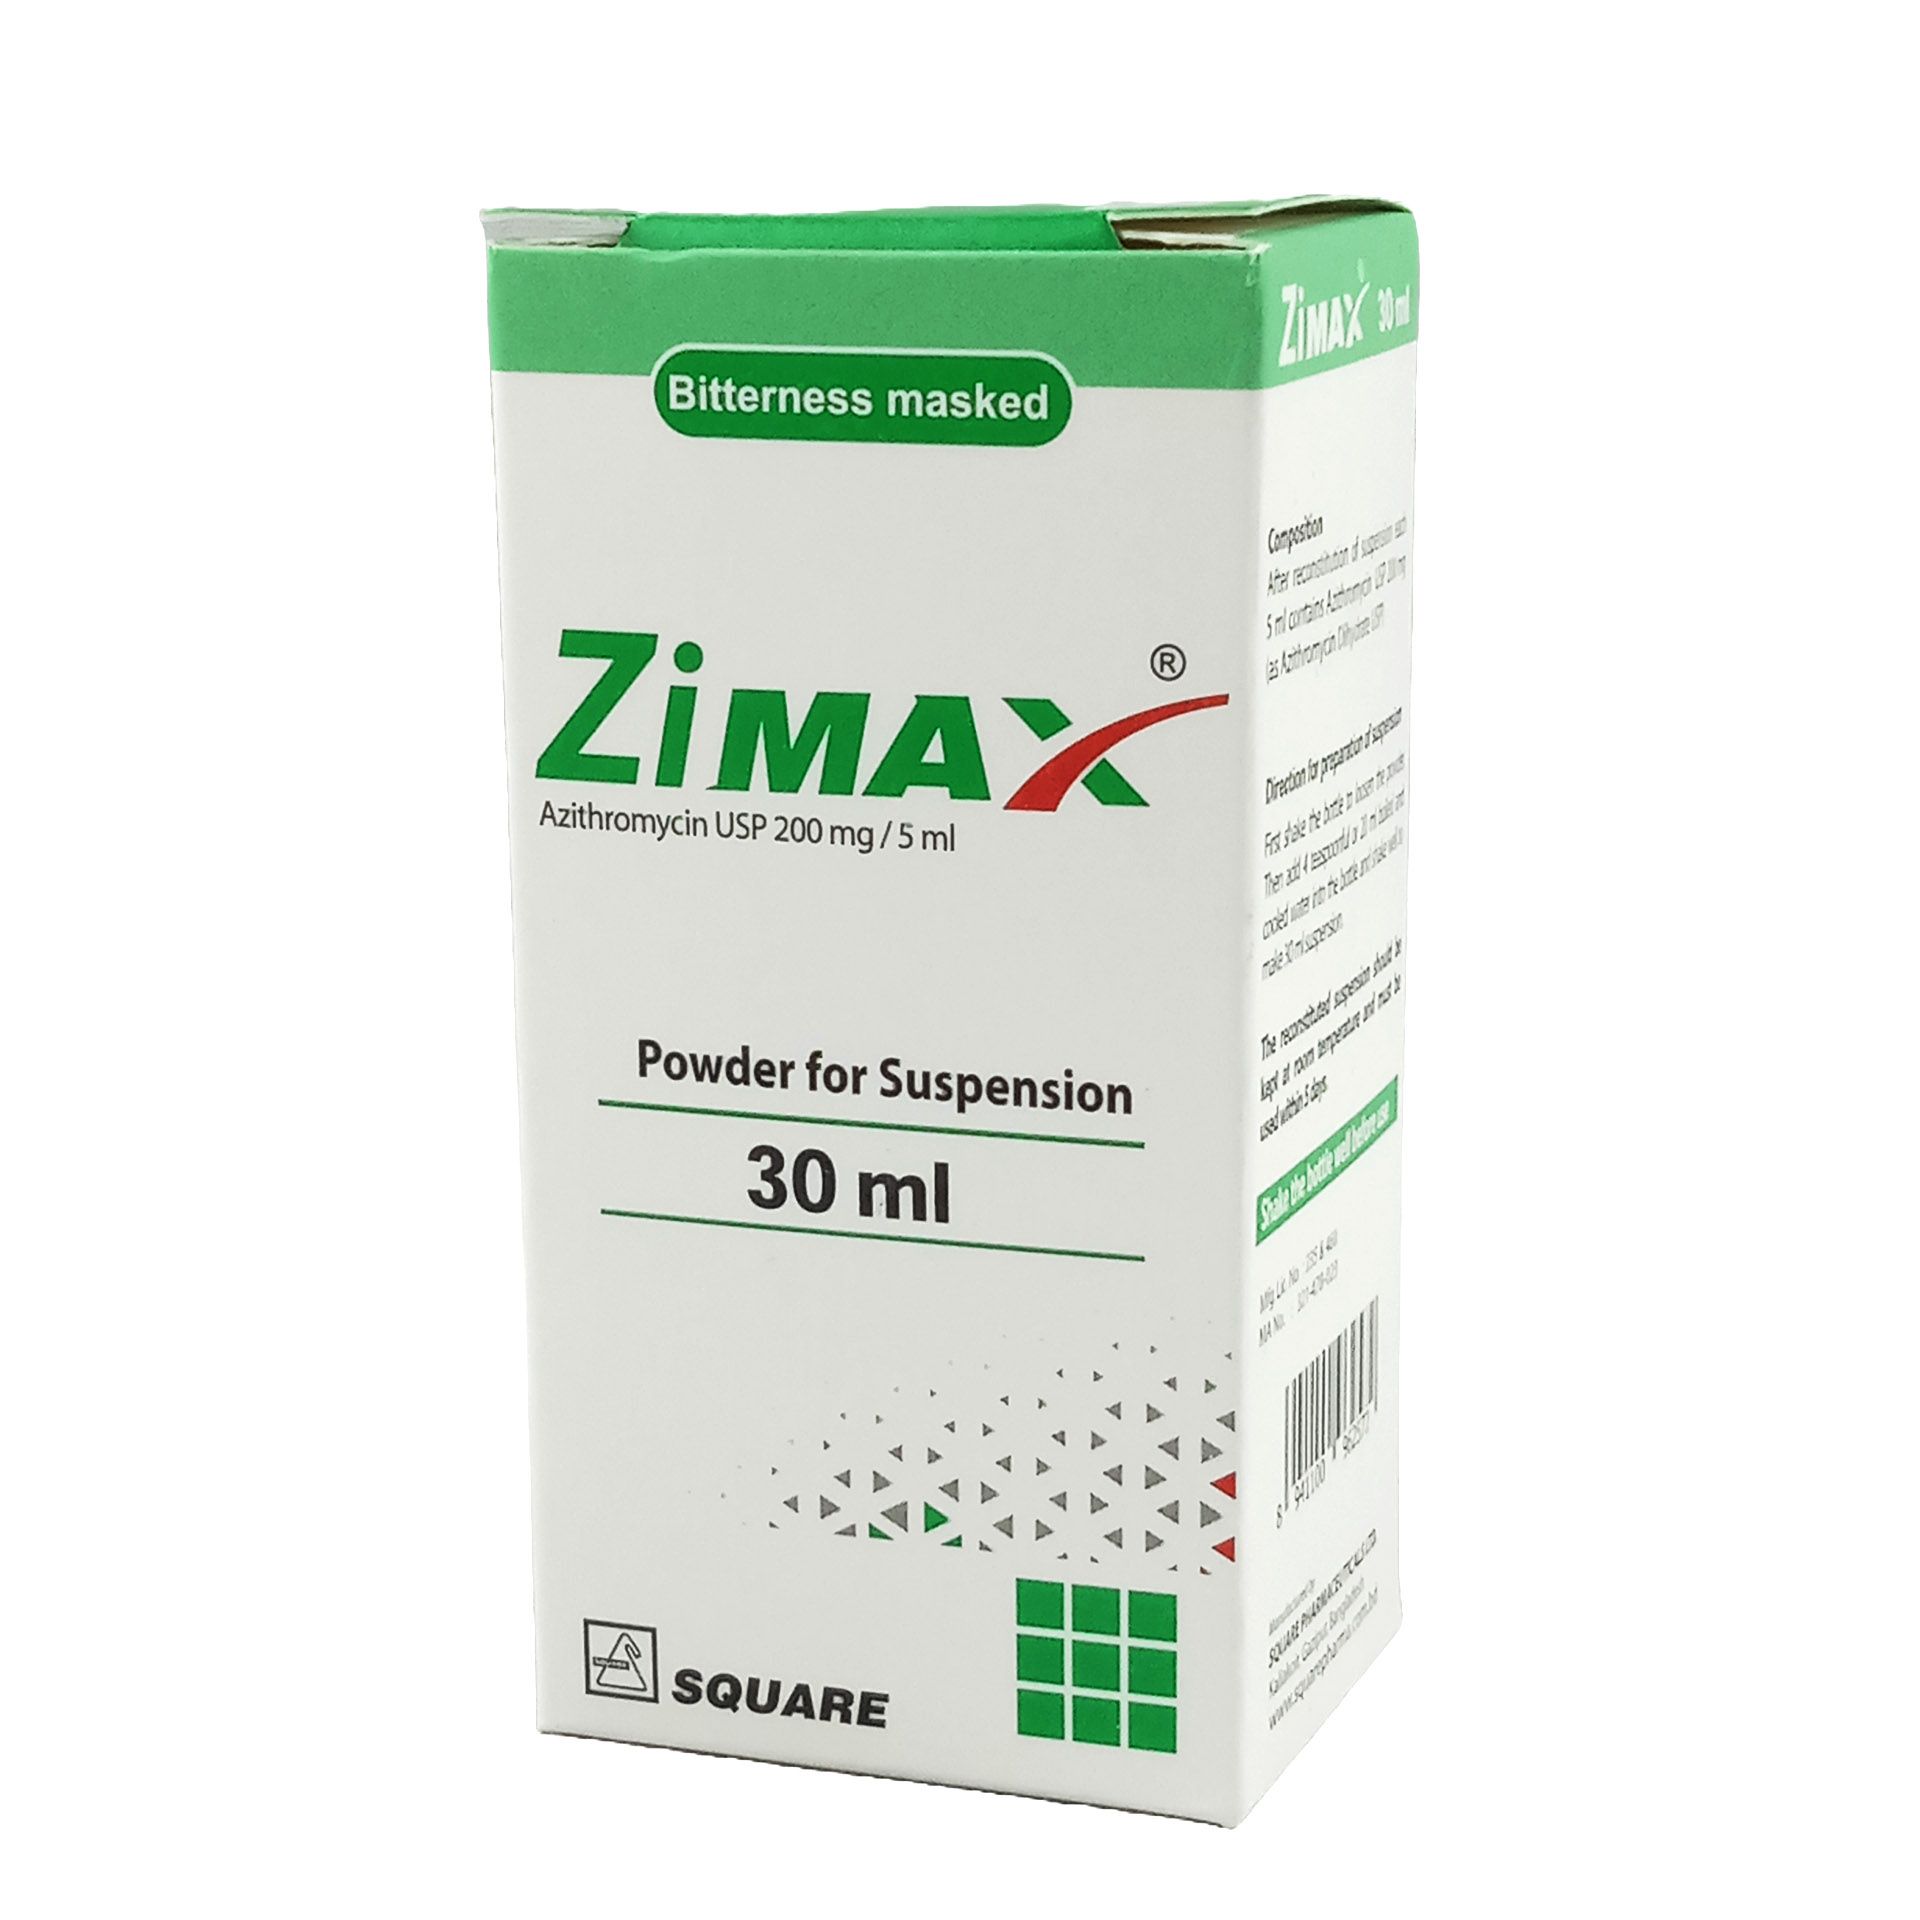 Zimax 30ml 200mg/5ml Powder for Suspension